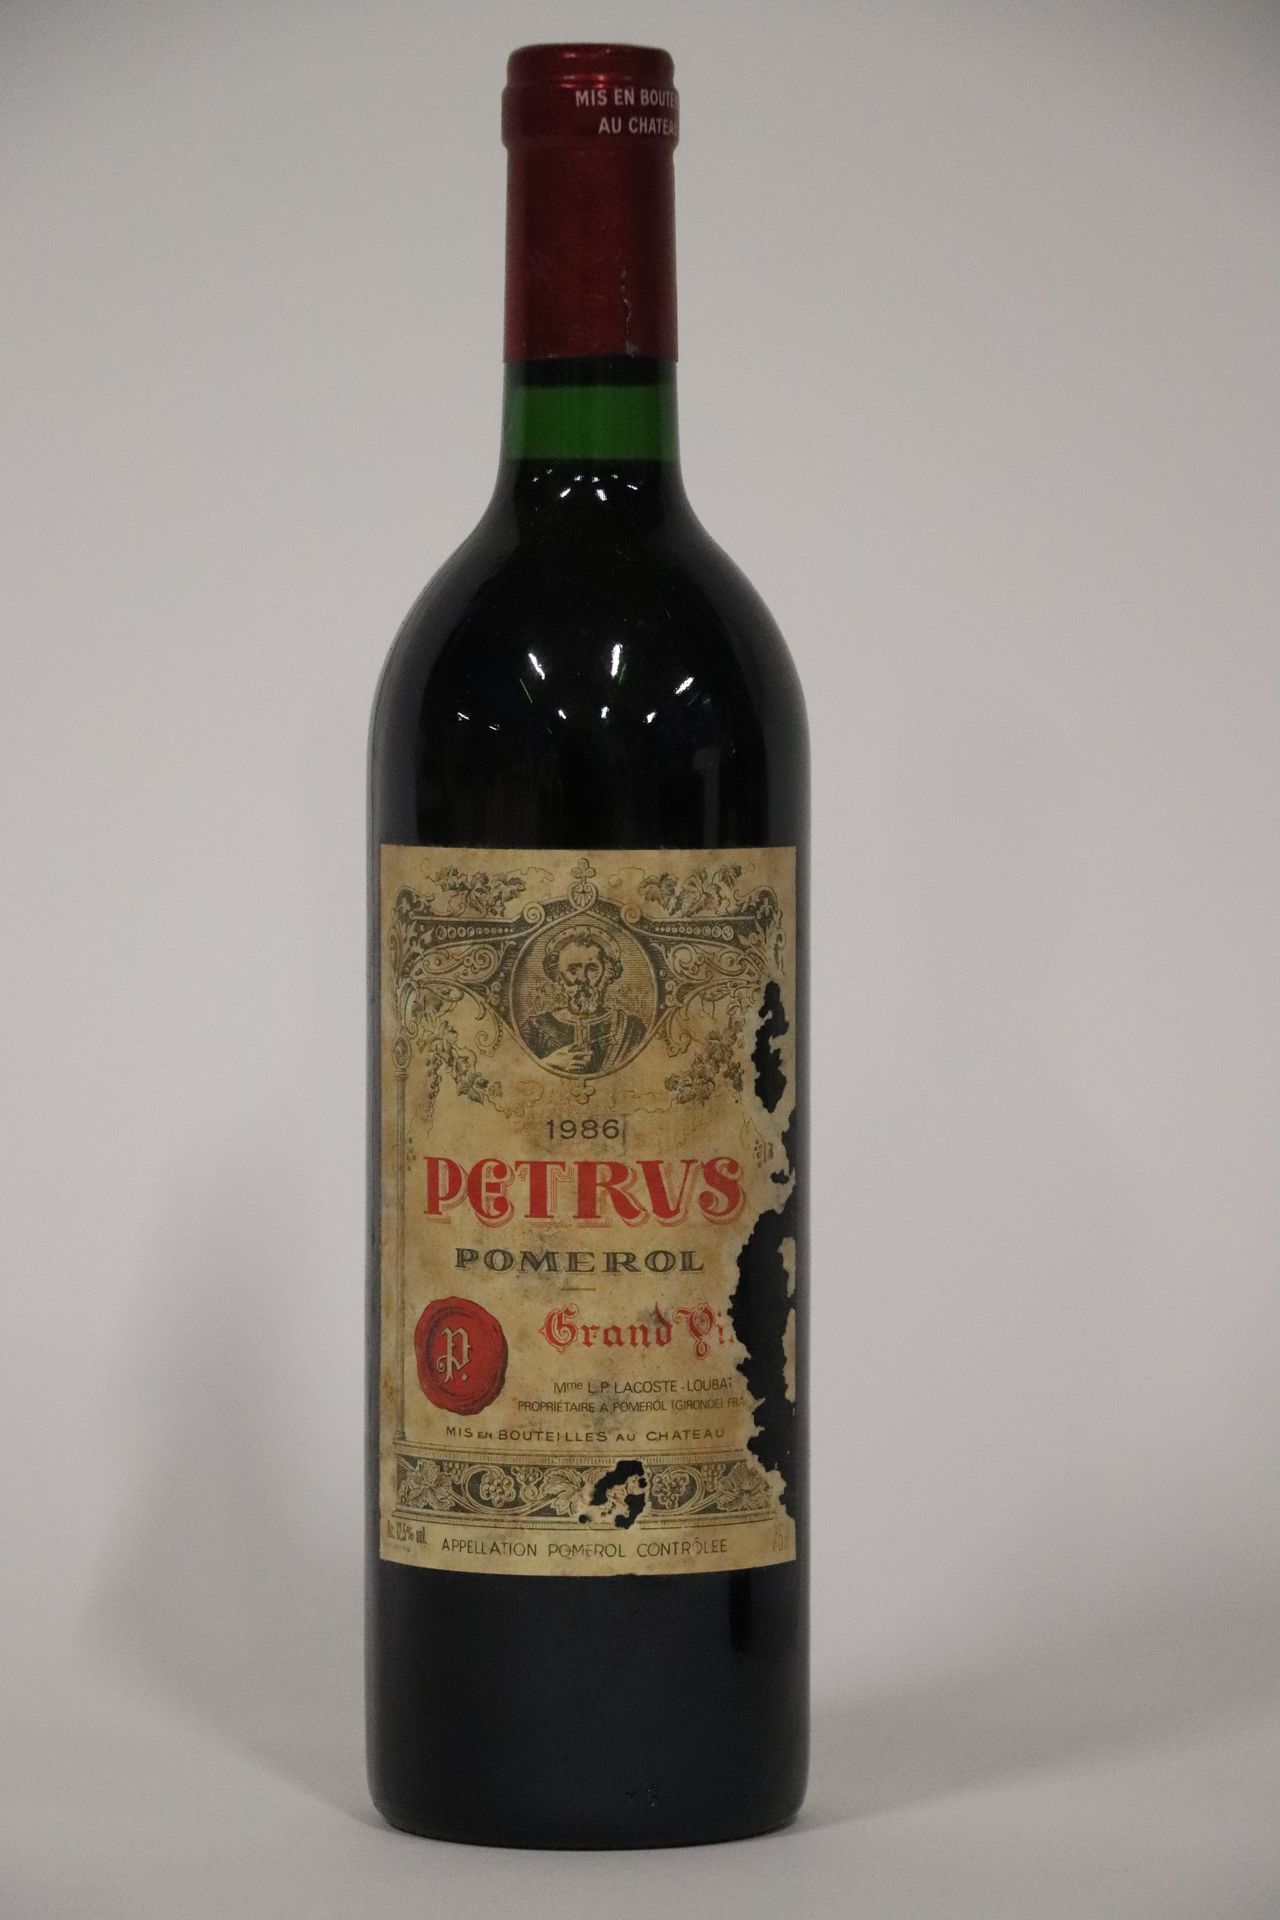 Null 1瓶。Petrus - Pomerol - 损坏的标签 - 1986年。